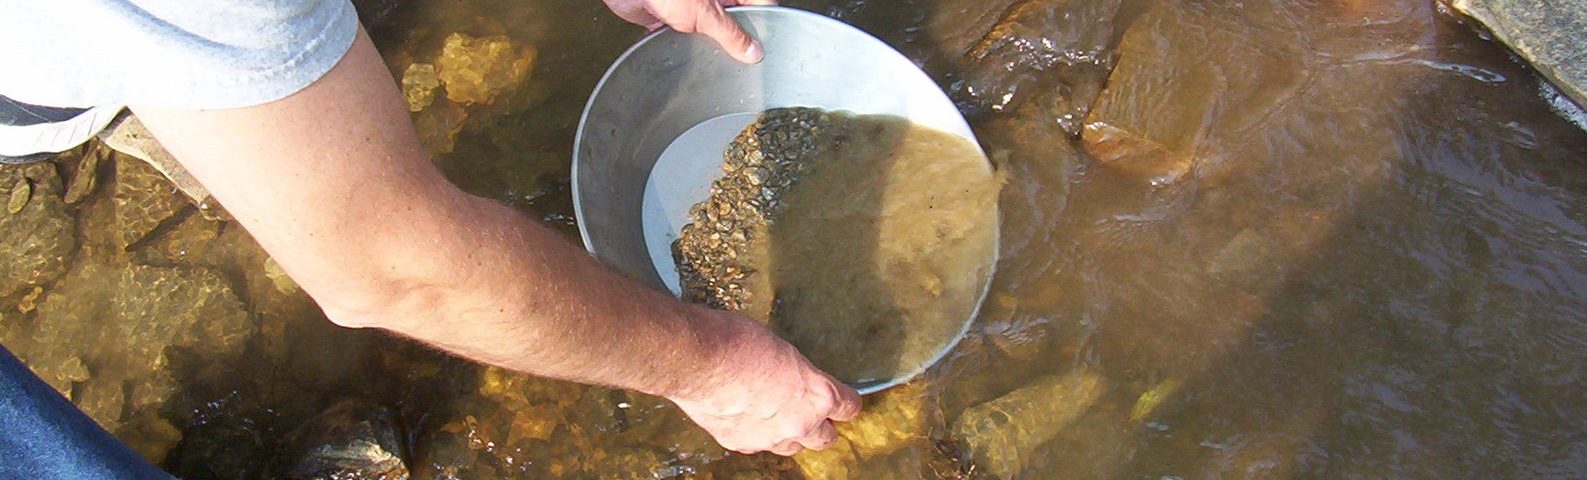 Gold panning at Bonanza Creek